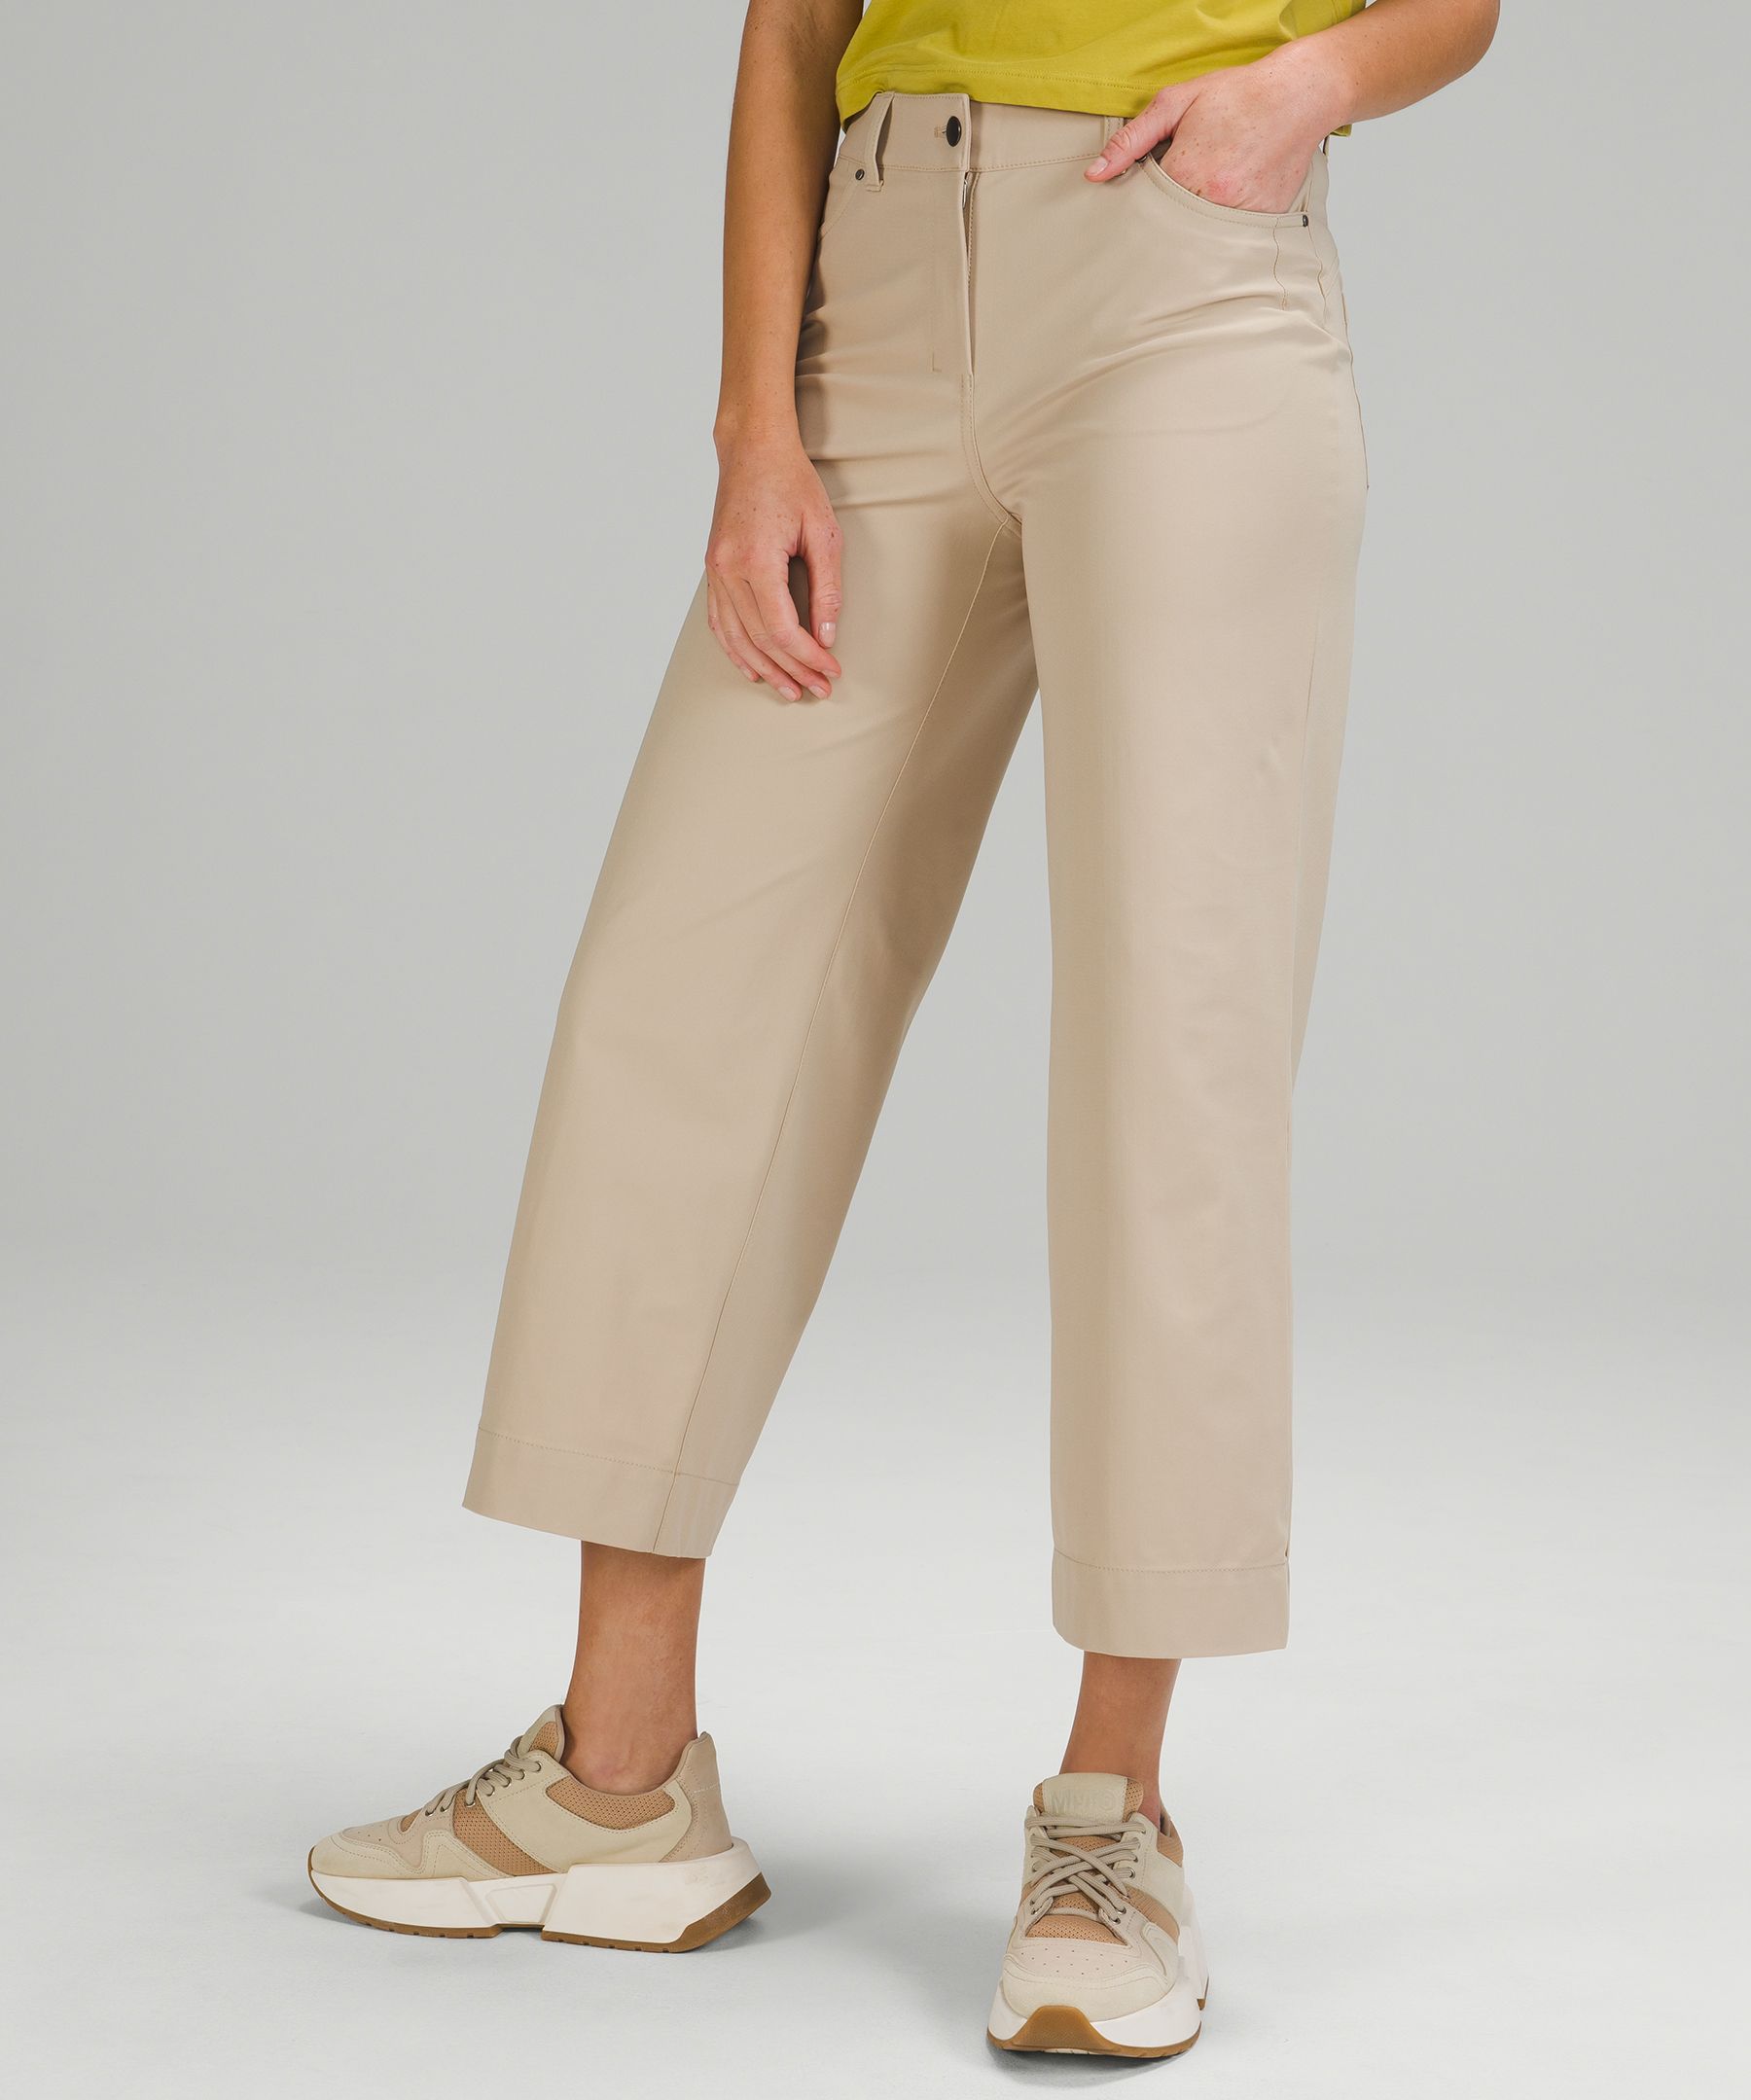 Ralph Lauren Golf Khaki Beige Stretch Women's Pants Size 6 Inseam